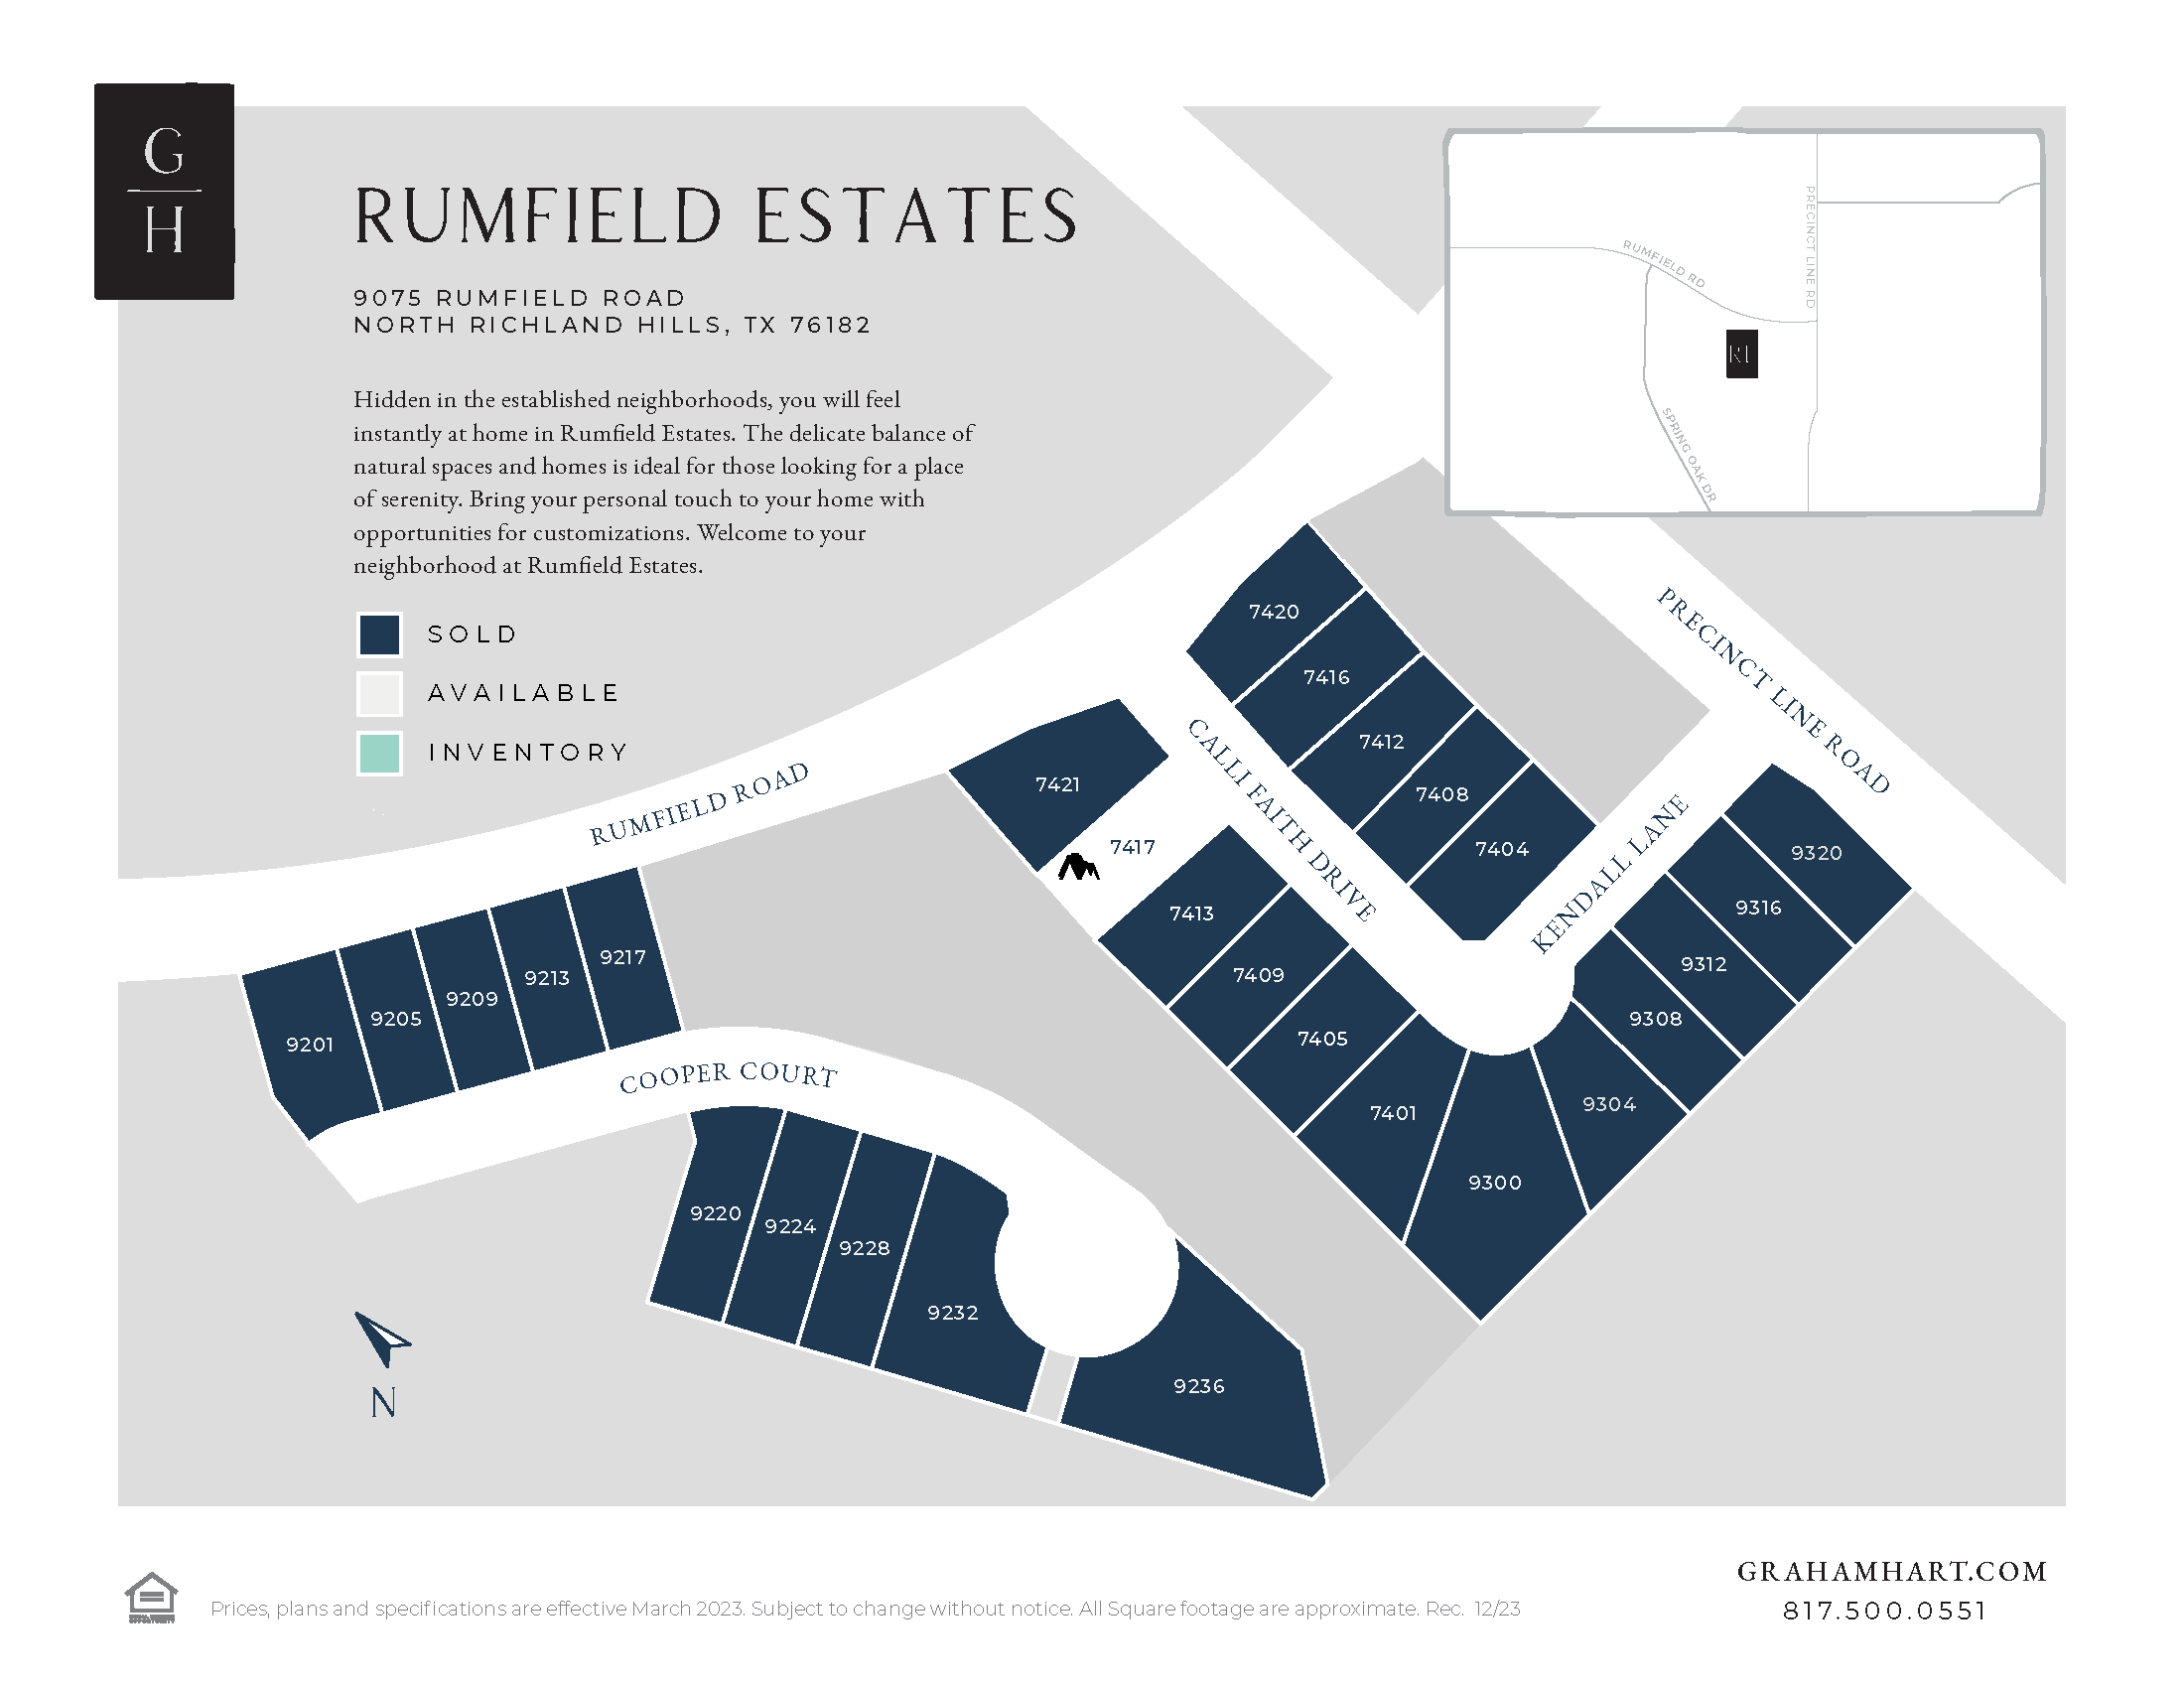 Rumfield Estates community plat map